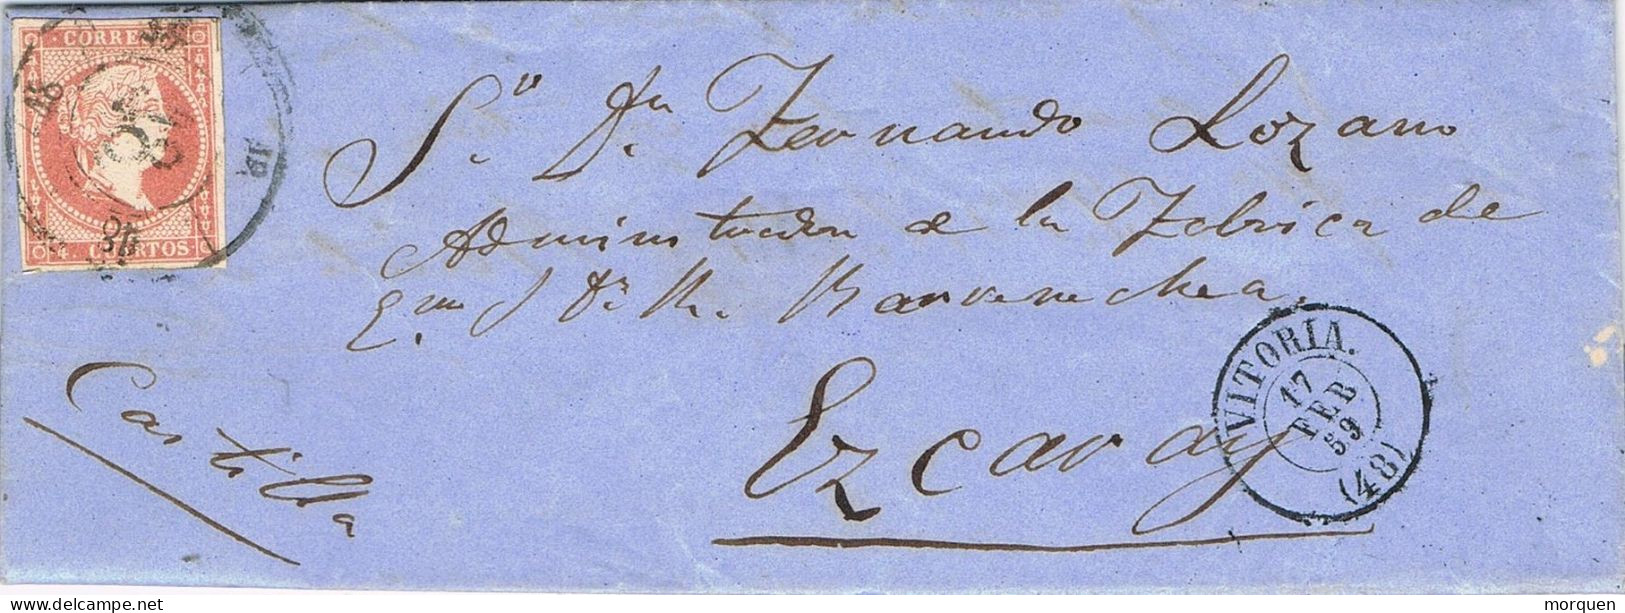 55137. Carta Entera VITORIA 1859. Rueda De Carreta Numeral 48- Buena Estampacion - Covers & Documents